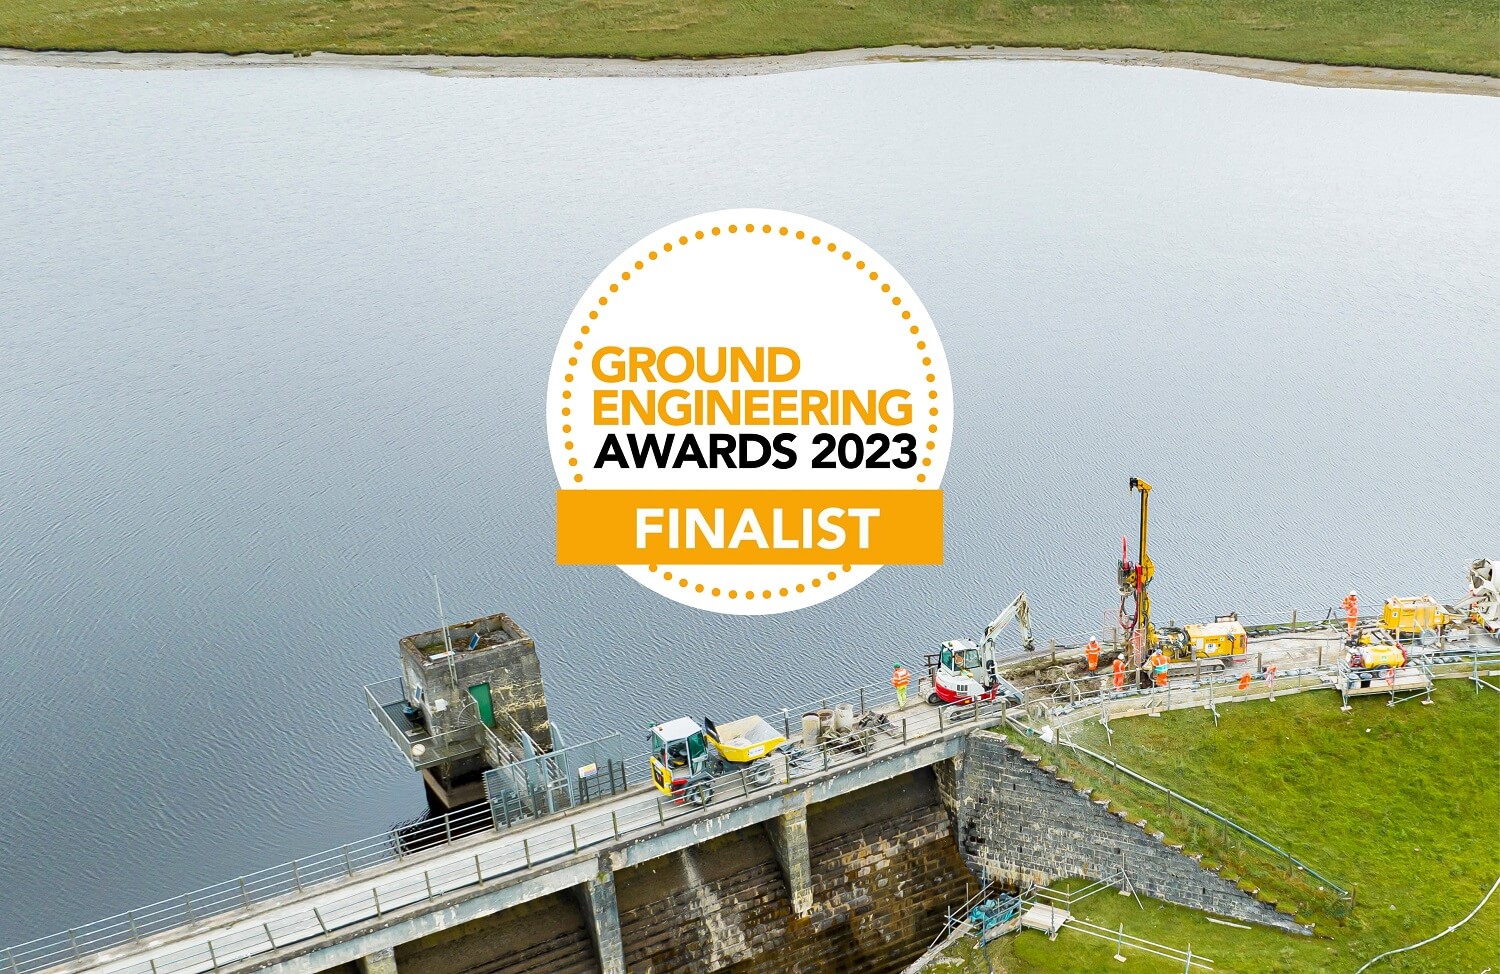 Aled Isaf Reservoir Aerial Photo - Ground Engineering Awards 2023 Finalist Logo overlaid